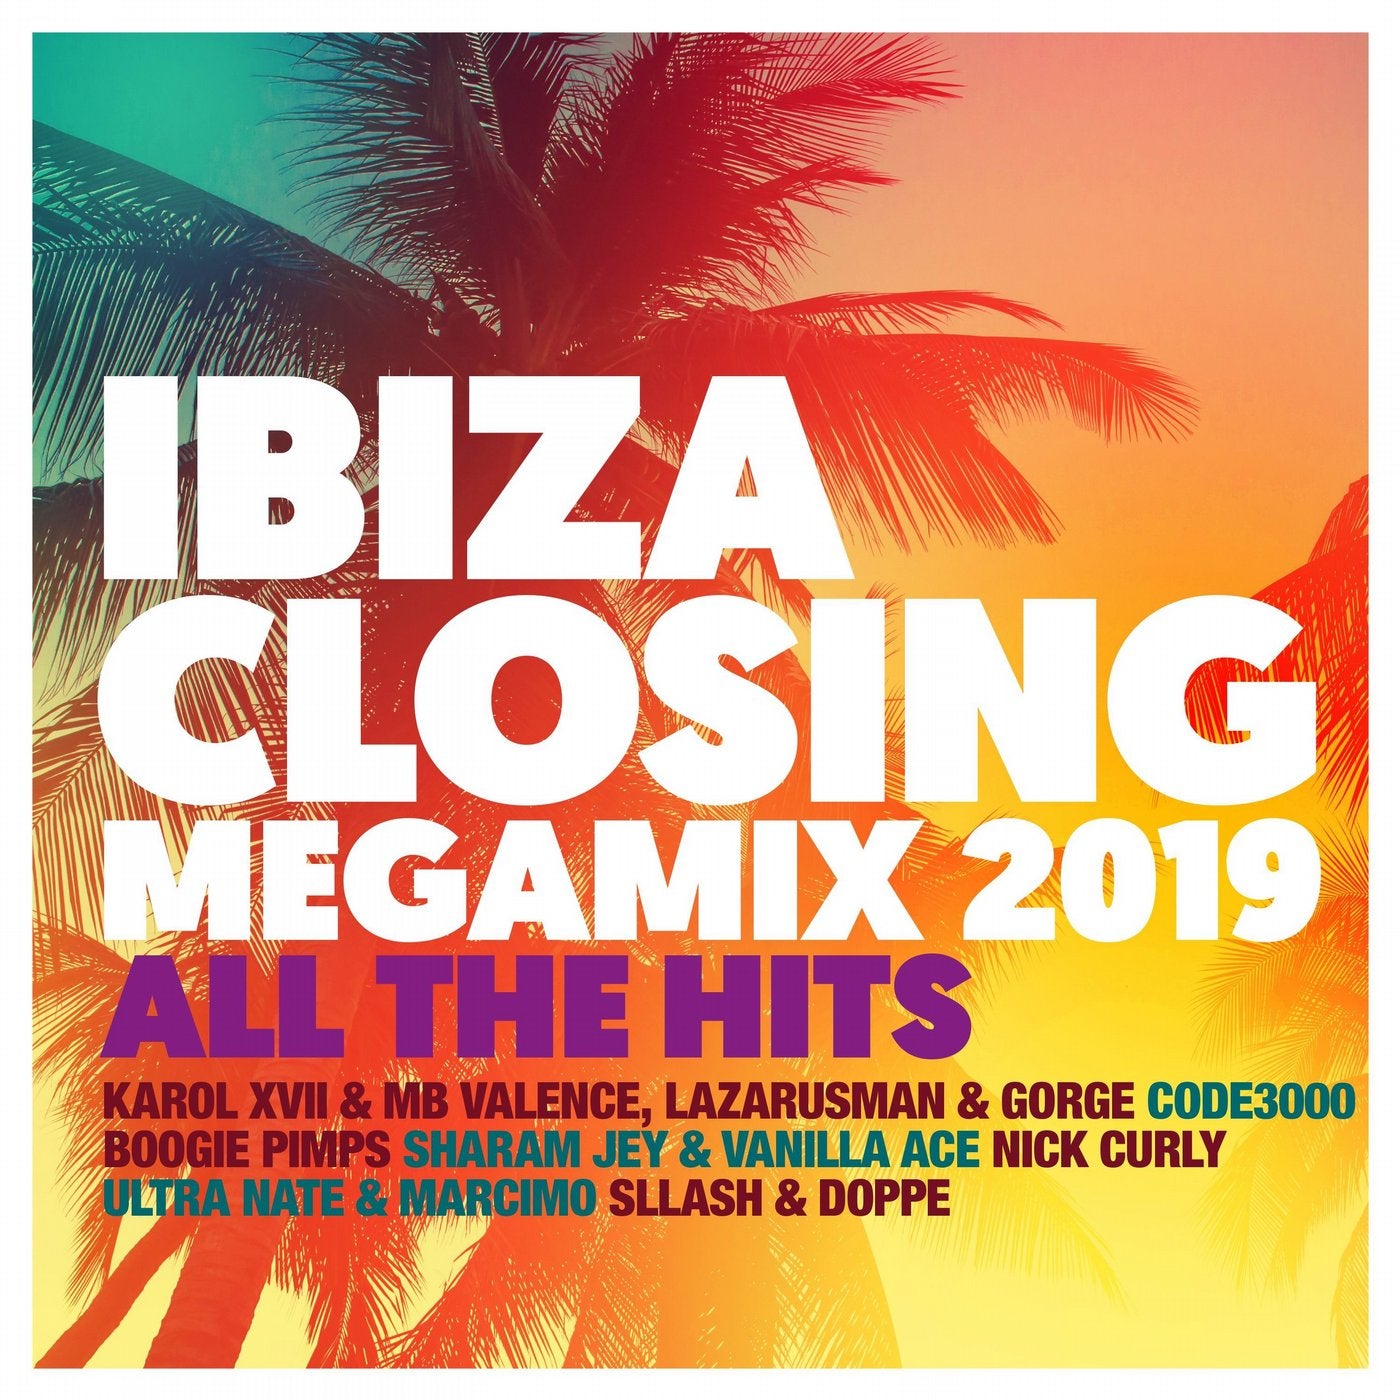 Ibiza Closing Megamix 2019 - All the Hits